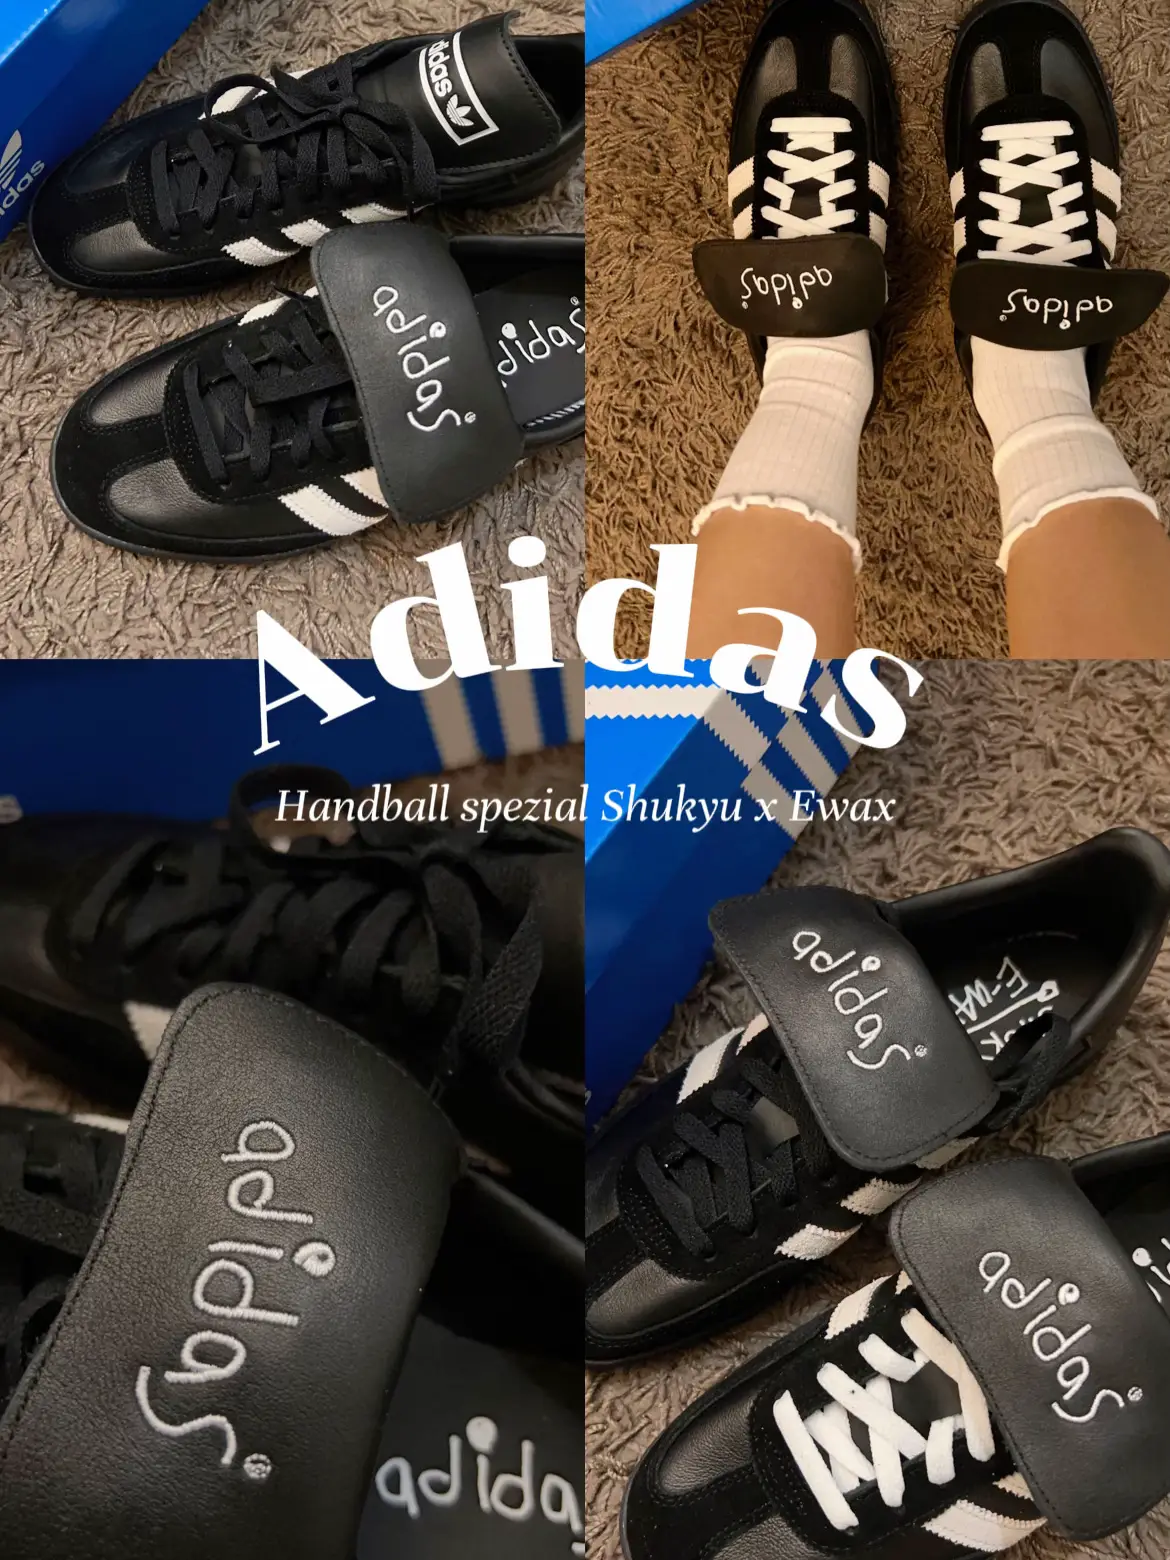 Adidas handball special shukyu x ewax❕ | Gallery posted by